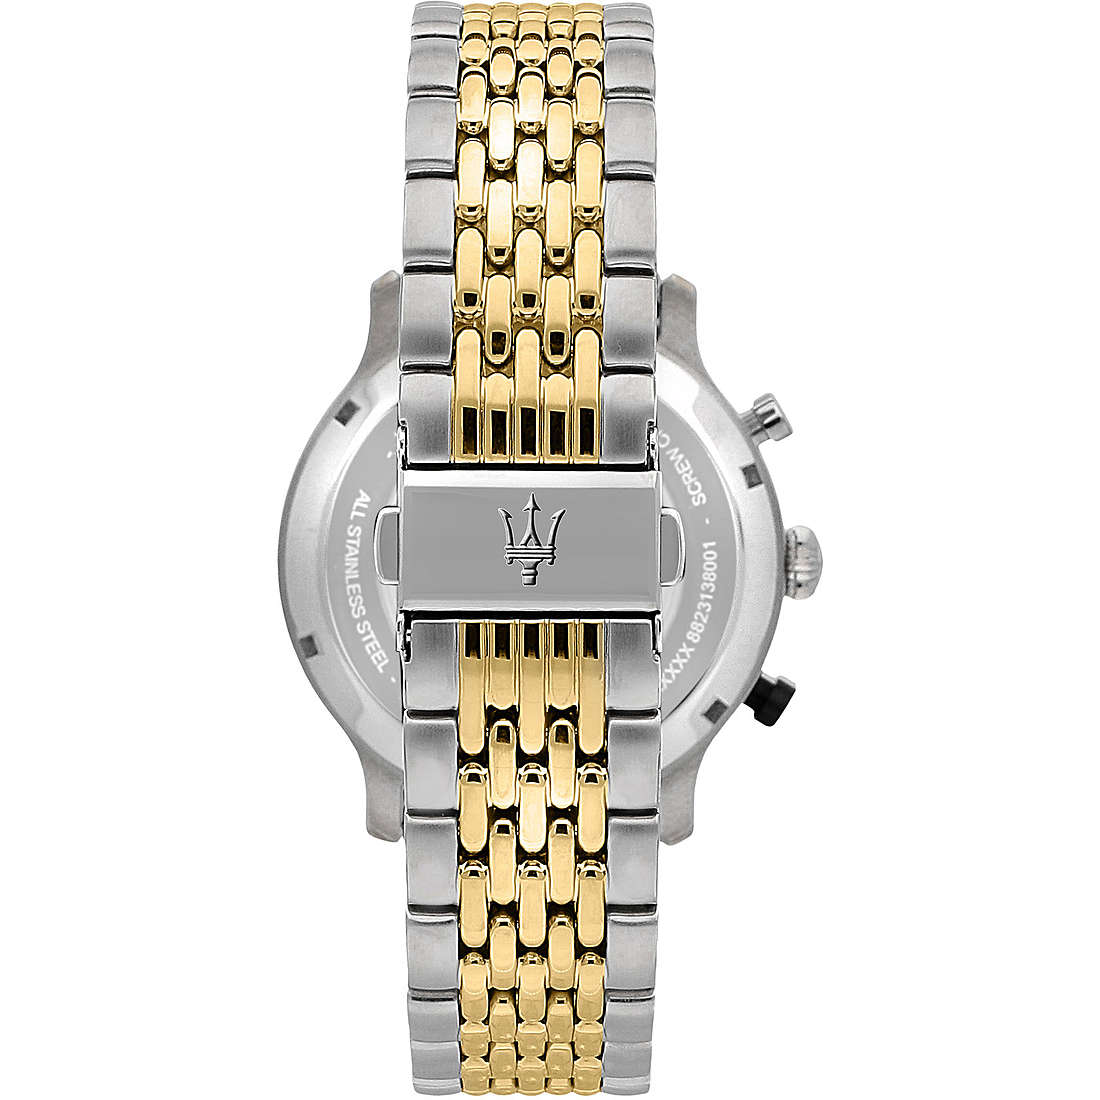 Uhr Chronograph mann Maserati Legend R8873638003